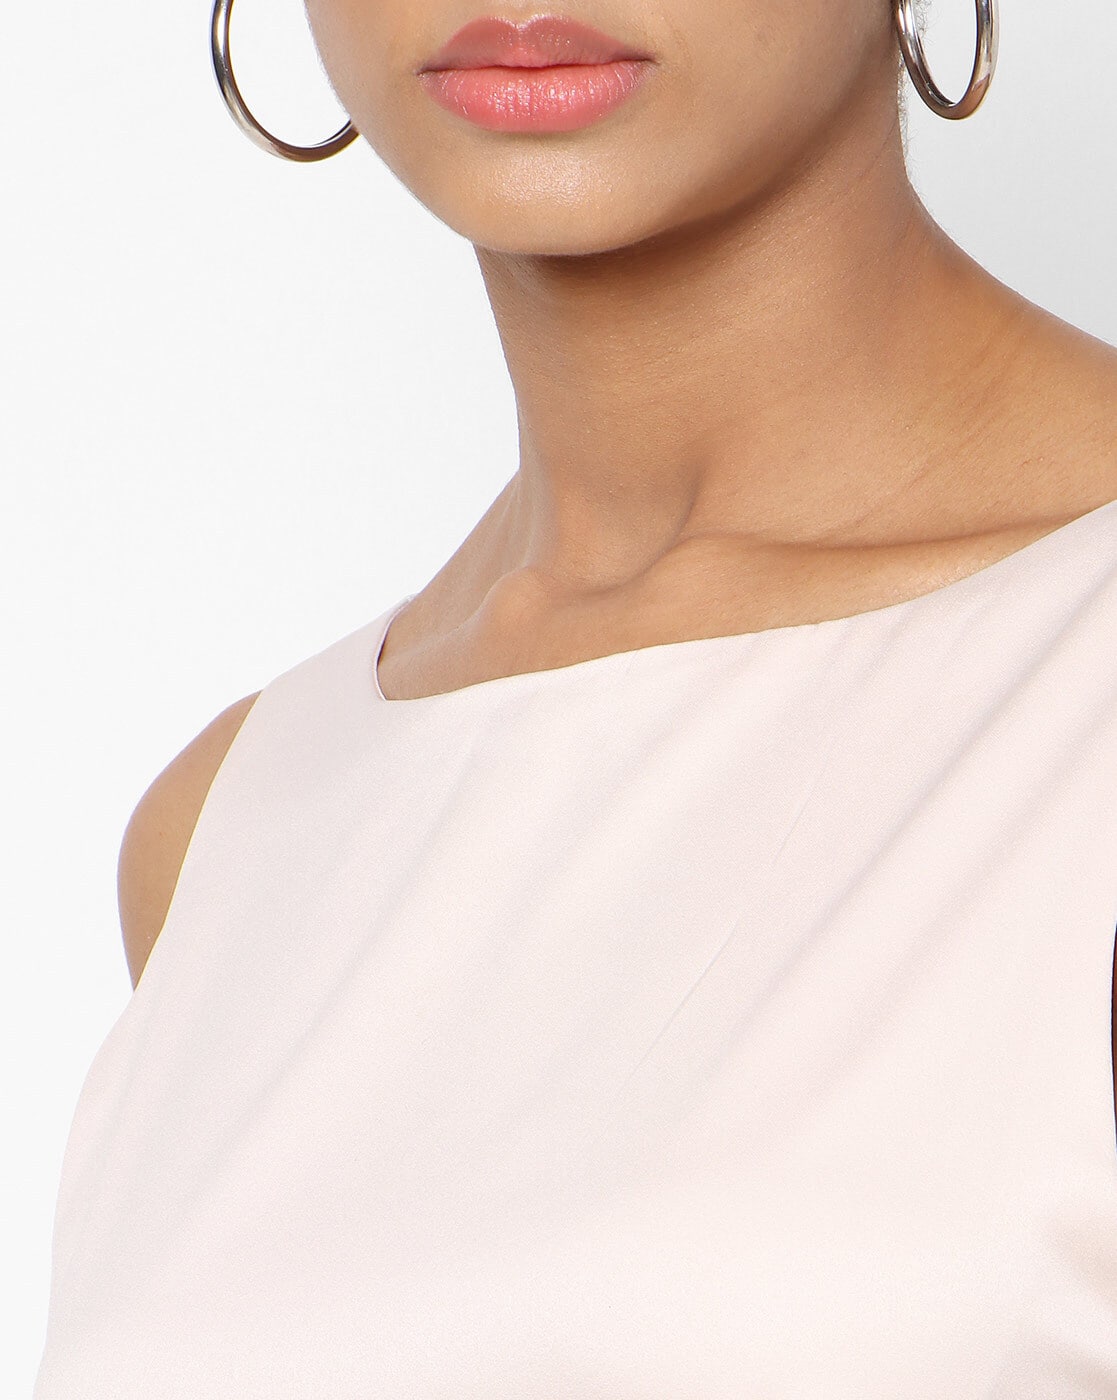 Buy Off-White Dresses for Women by Encrustd Online